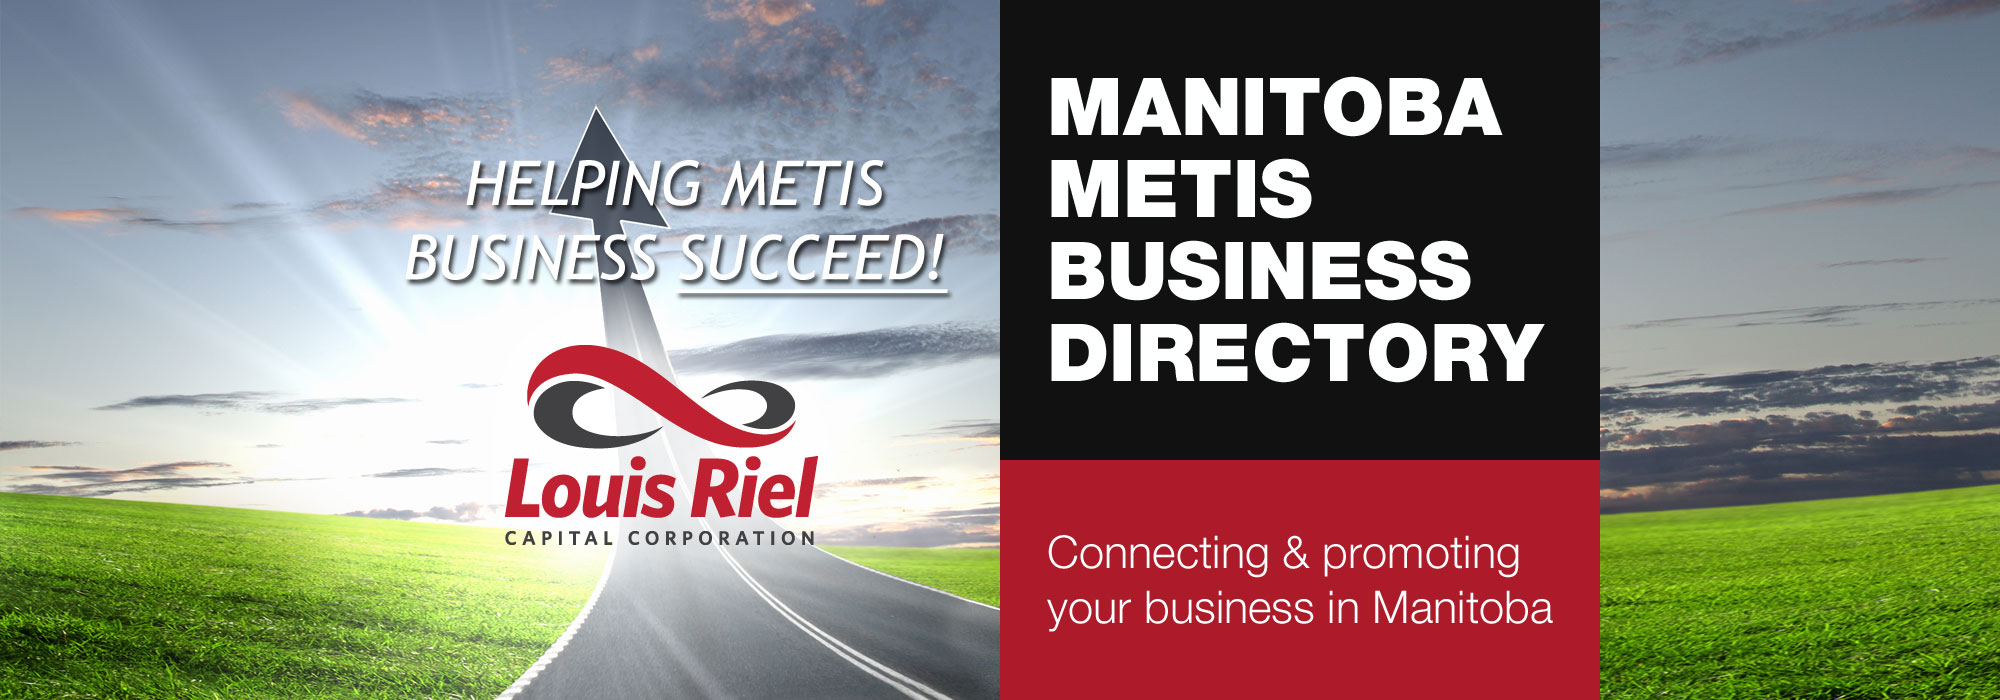 Manitoba Metis Business Directory